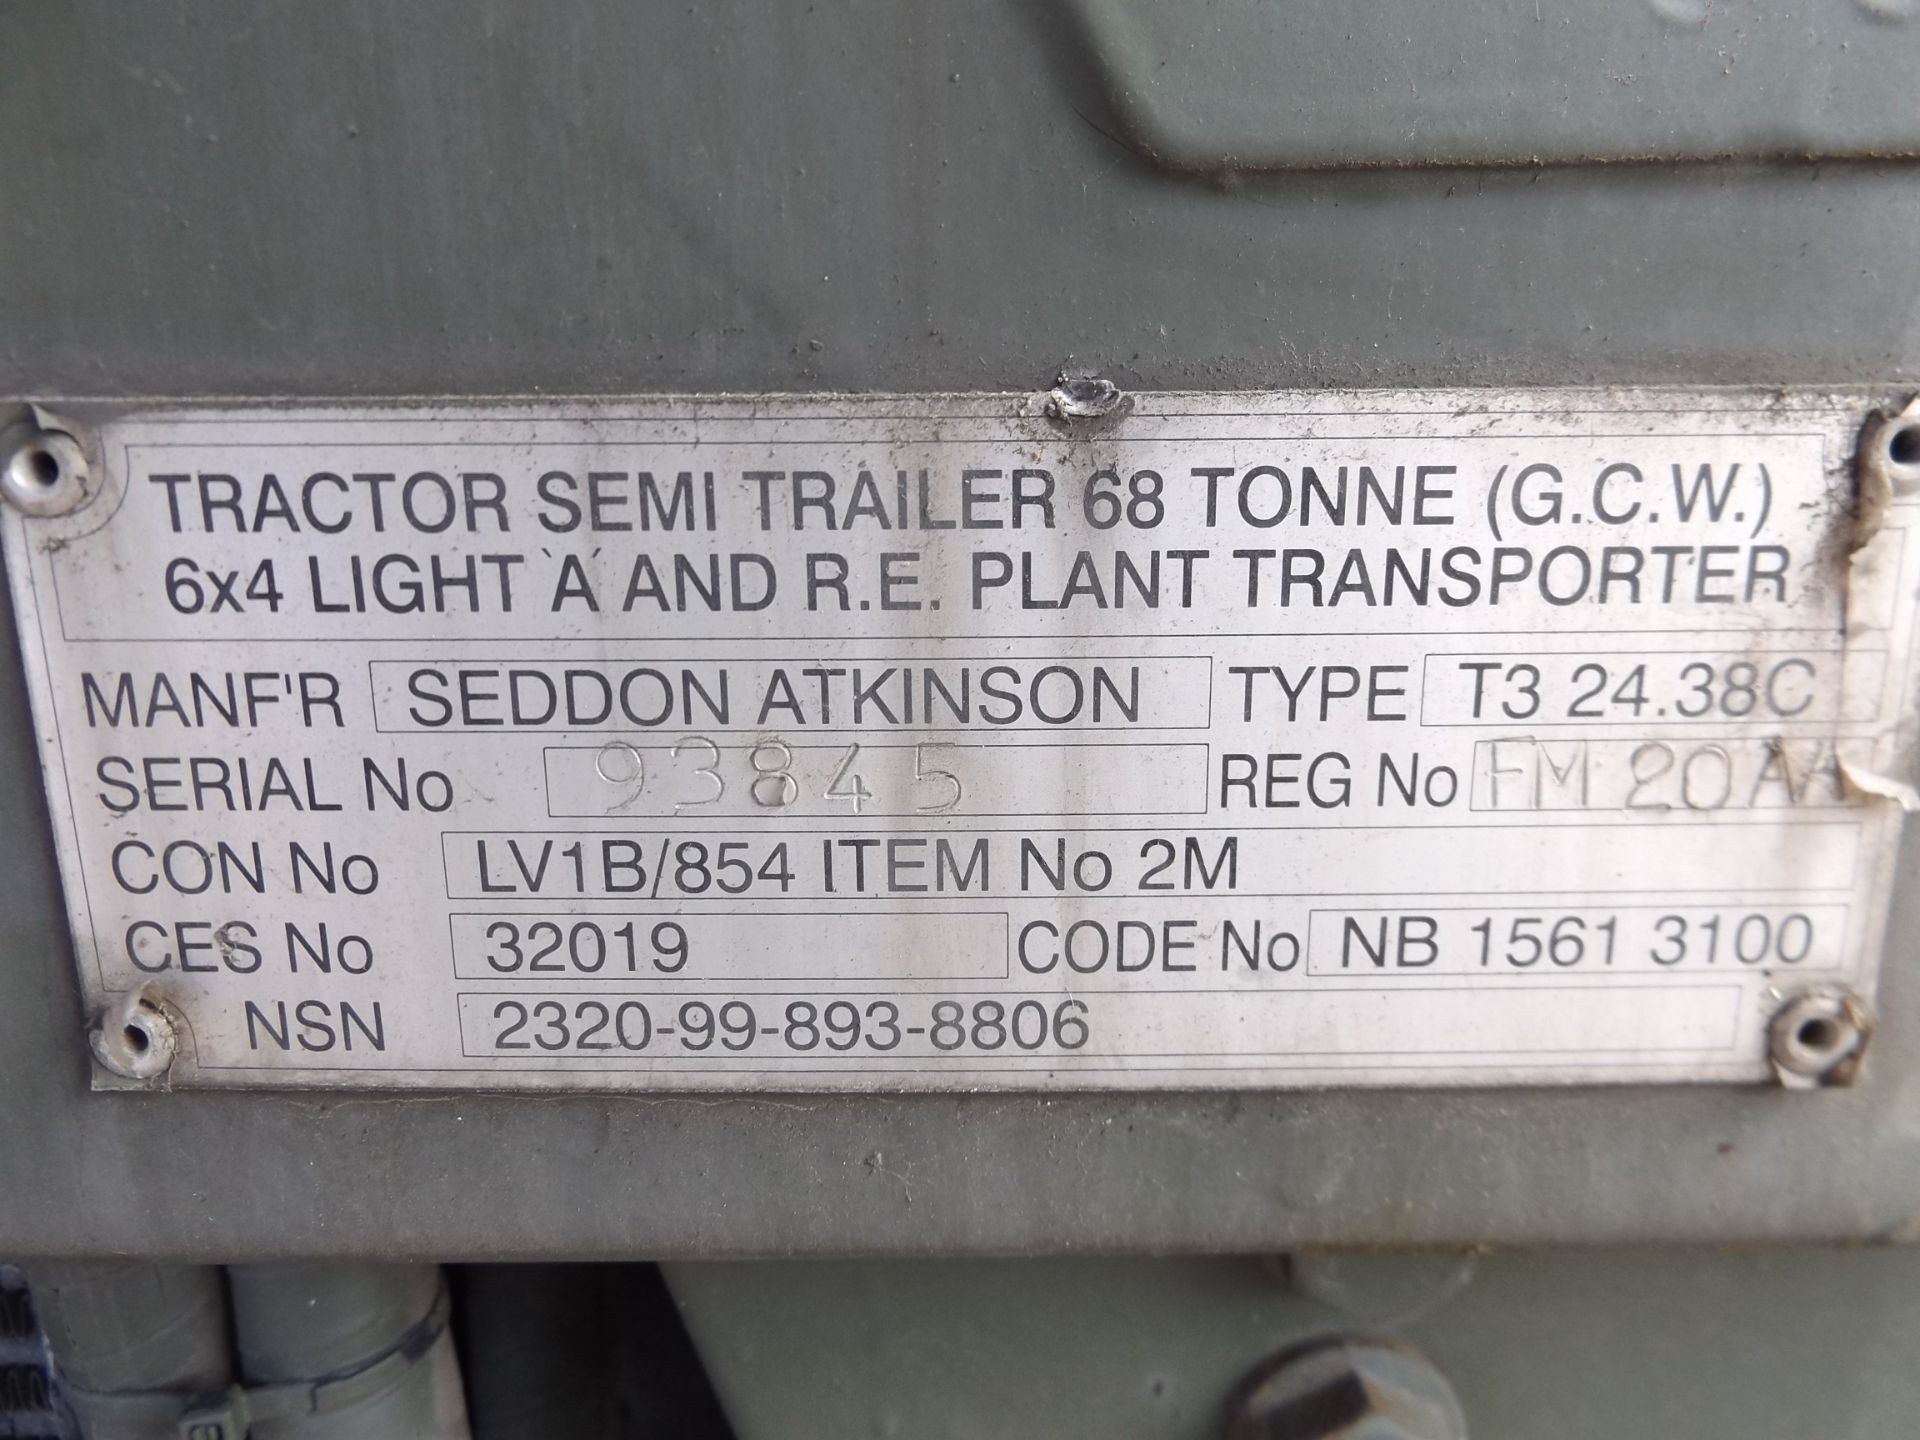 Seddon Atkinson TC24.38C 68 ton 6x4 RHD tractor unit - Image 16 of 17